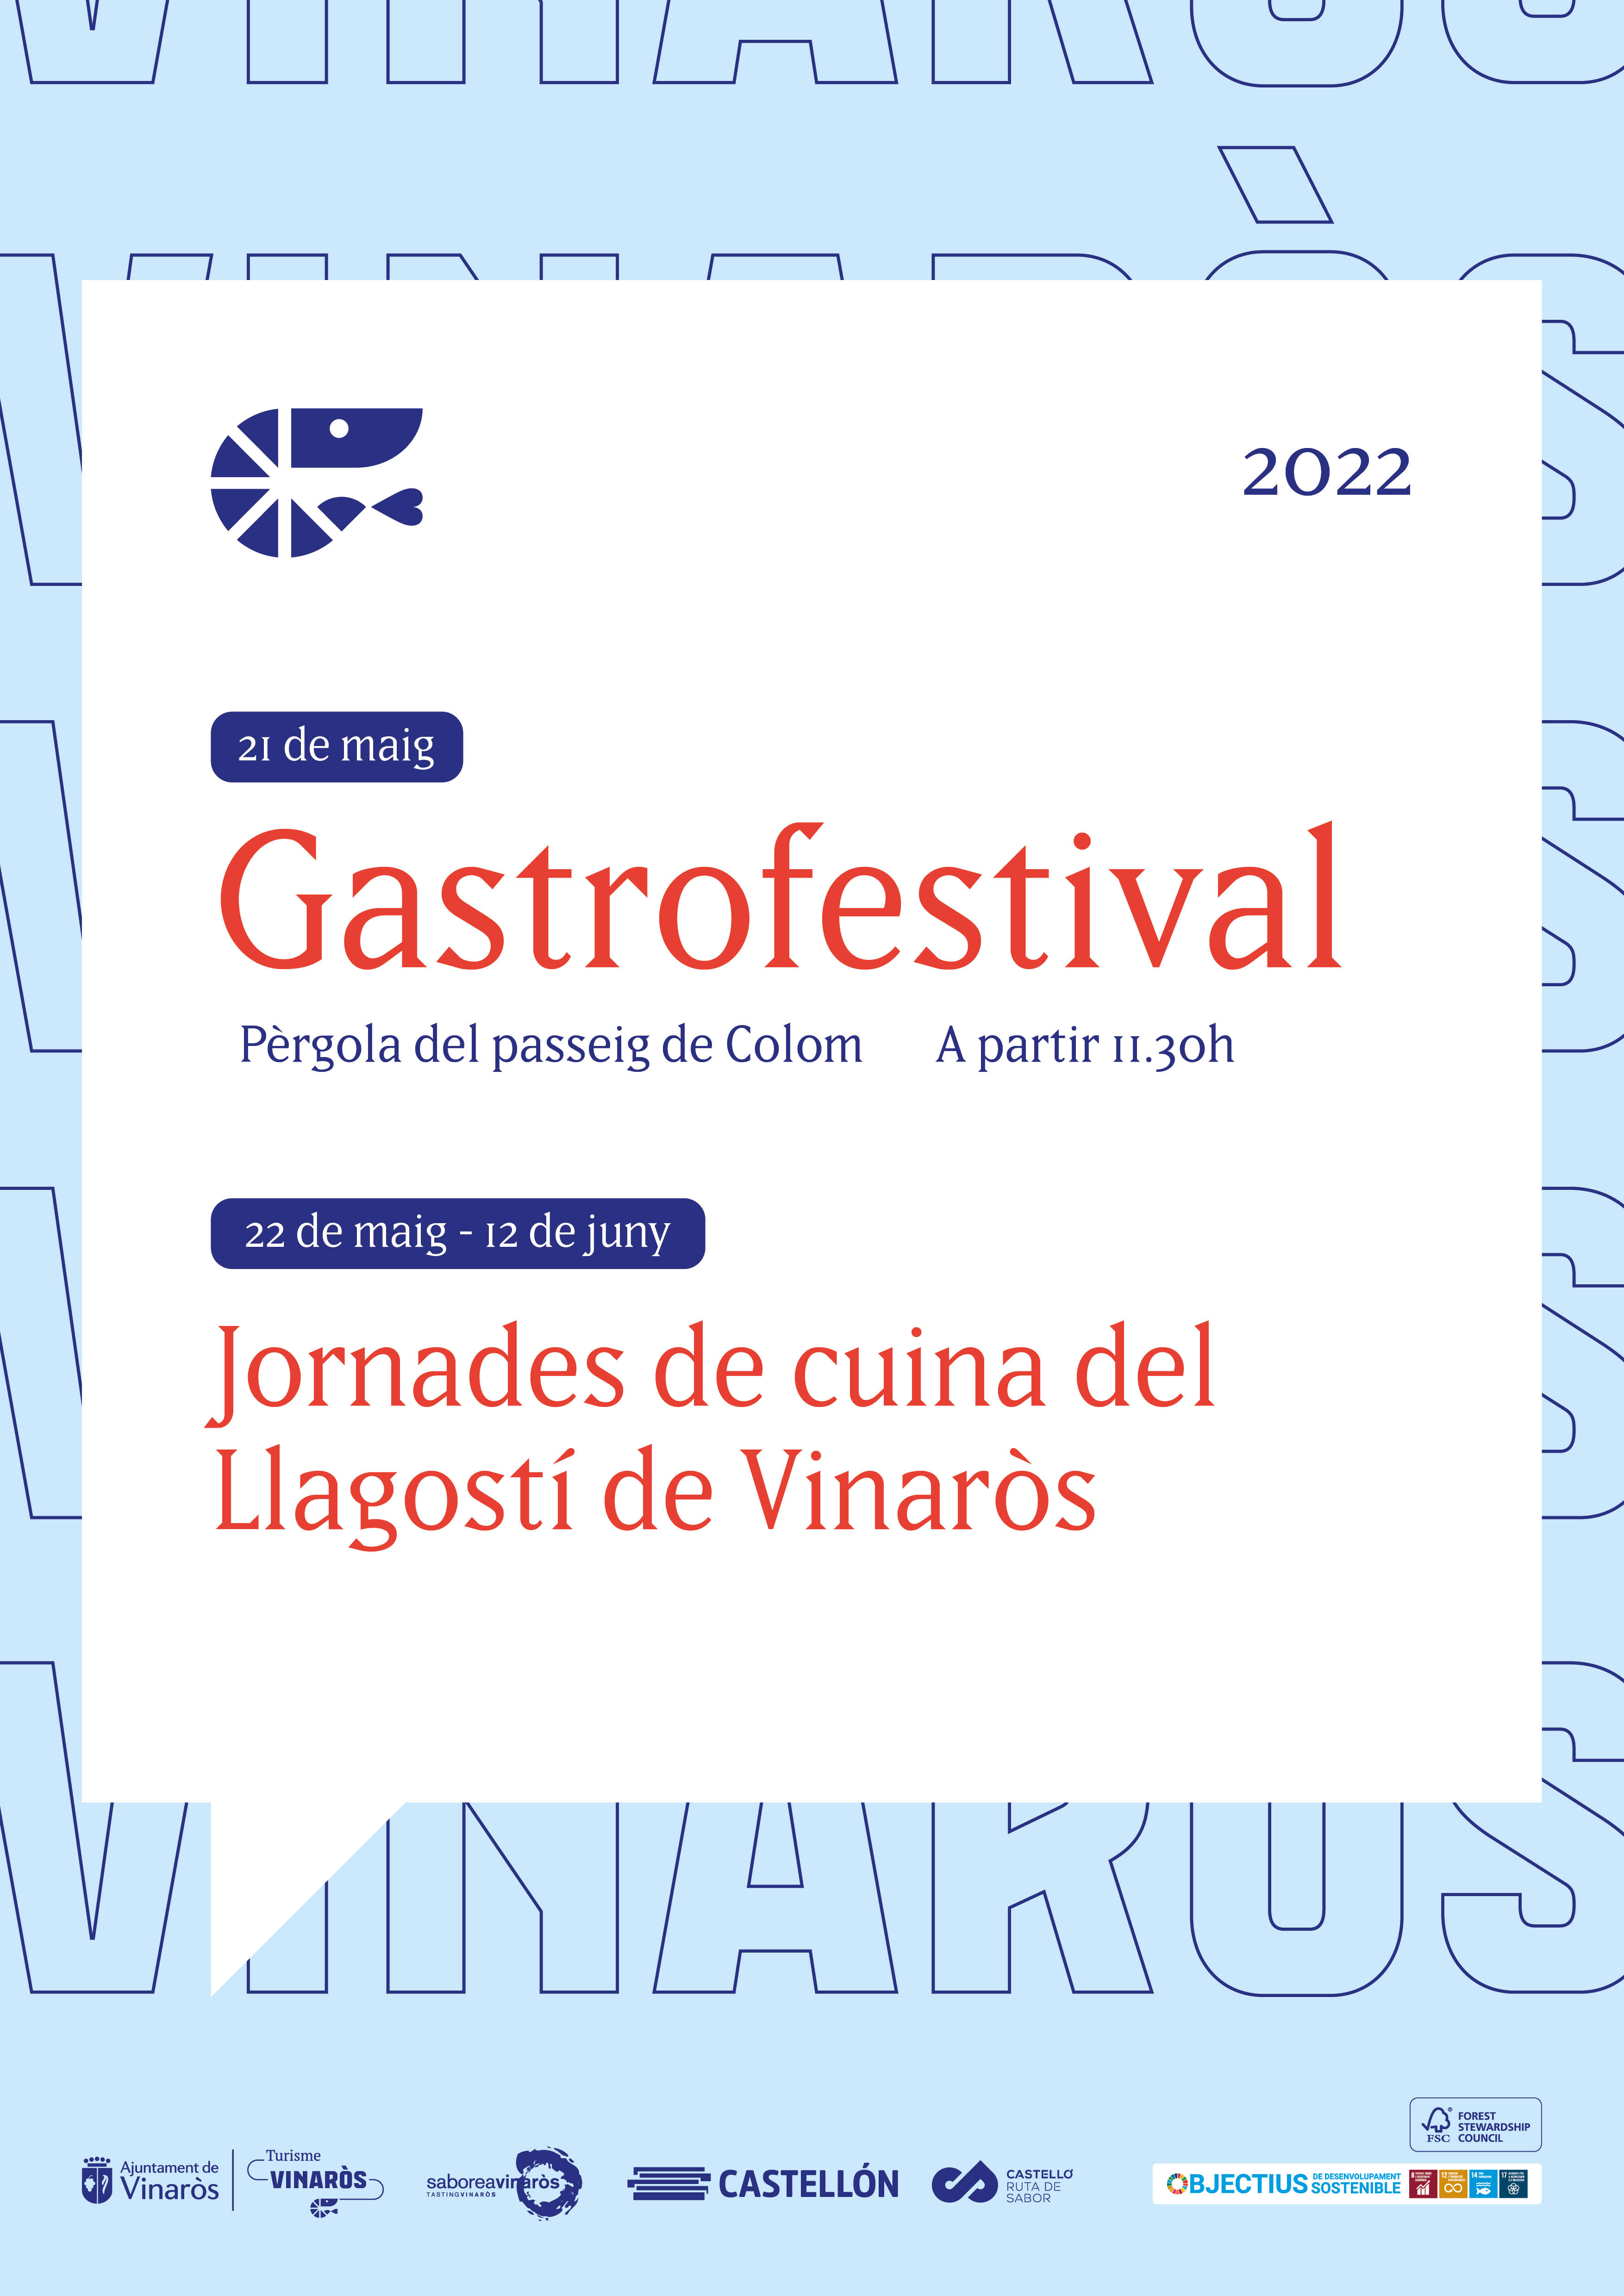 I Gatrofestival Langostino 2022